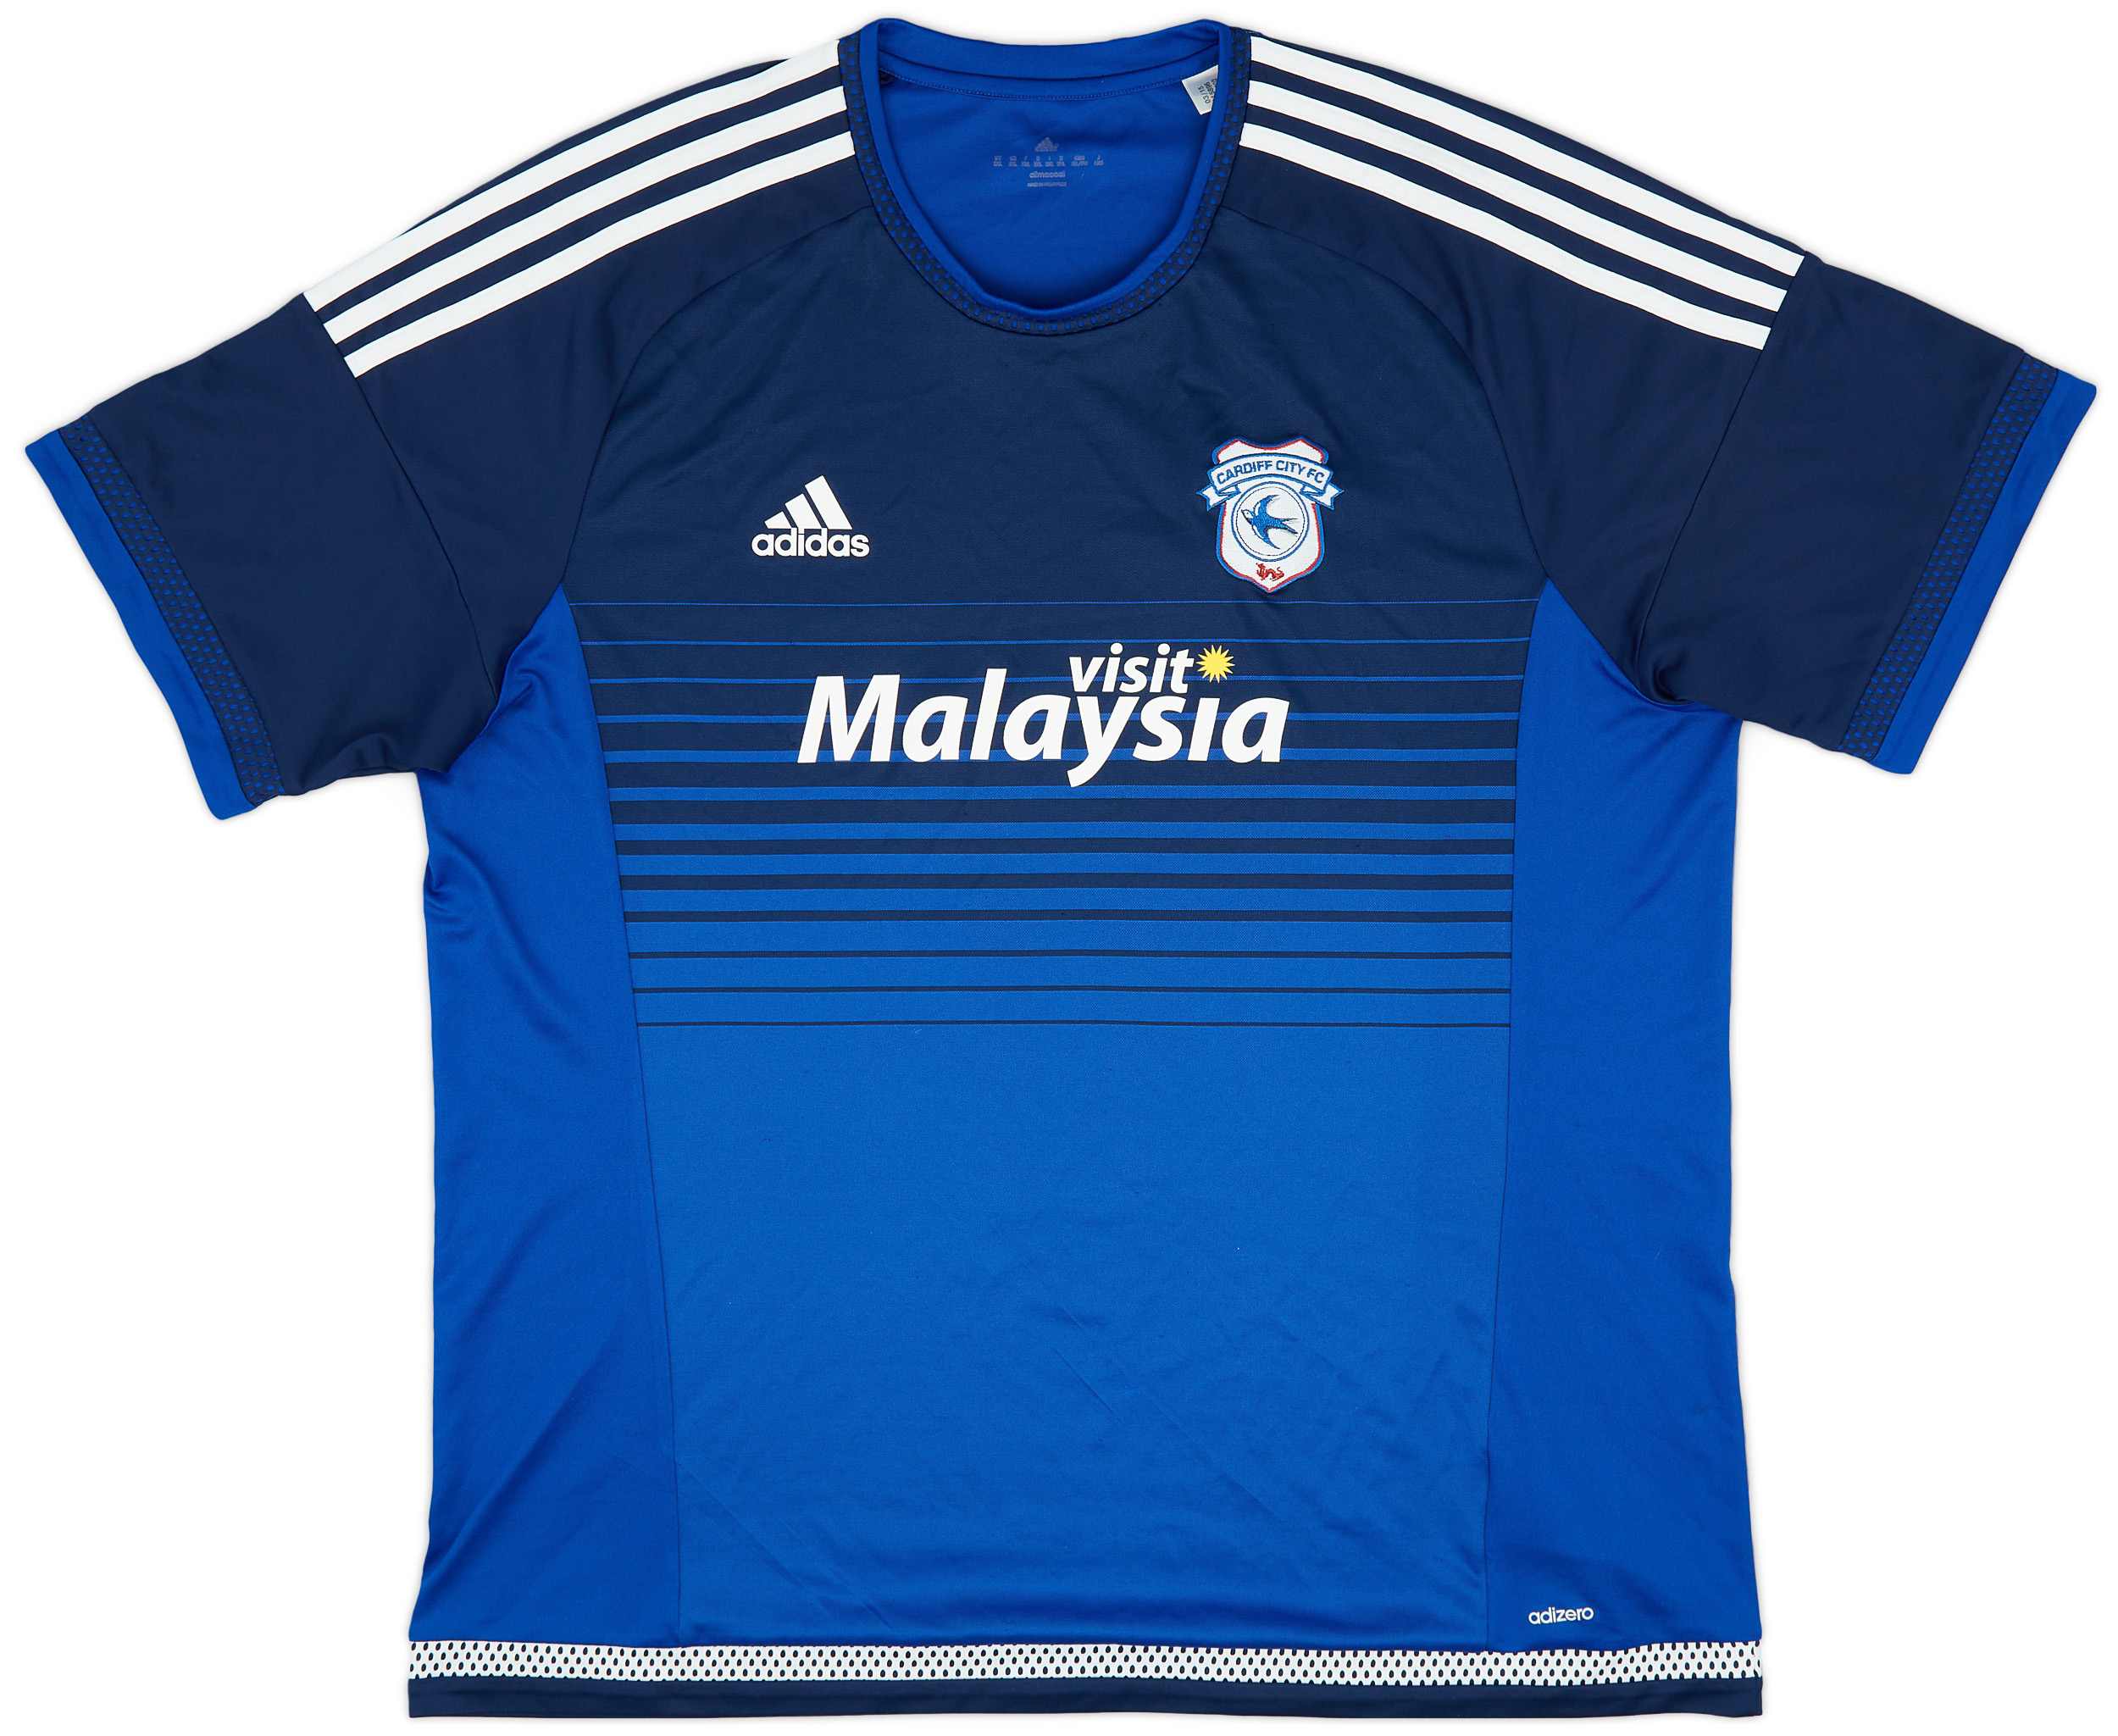 2015-16 Cardiff City Home Shirt - 9/10 - ()